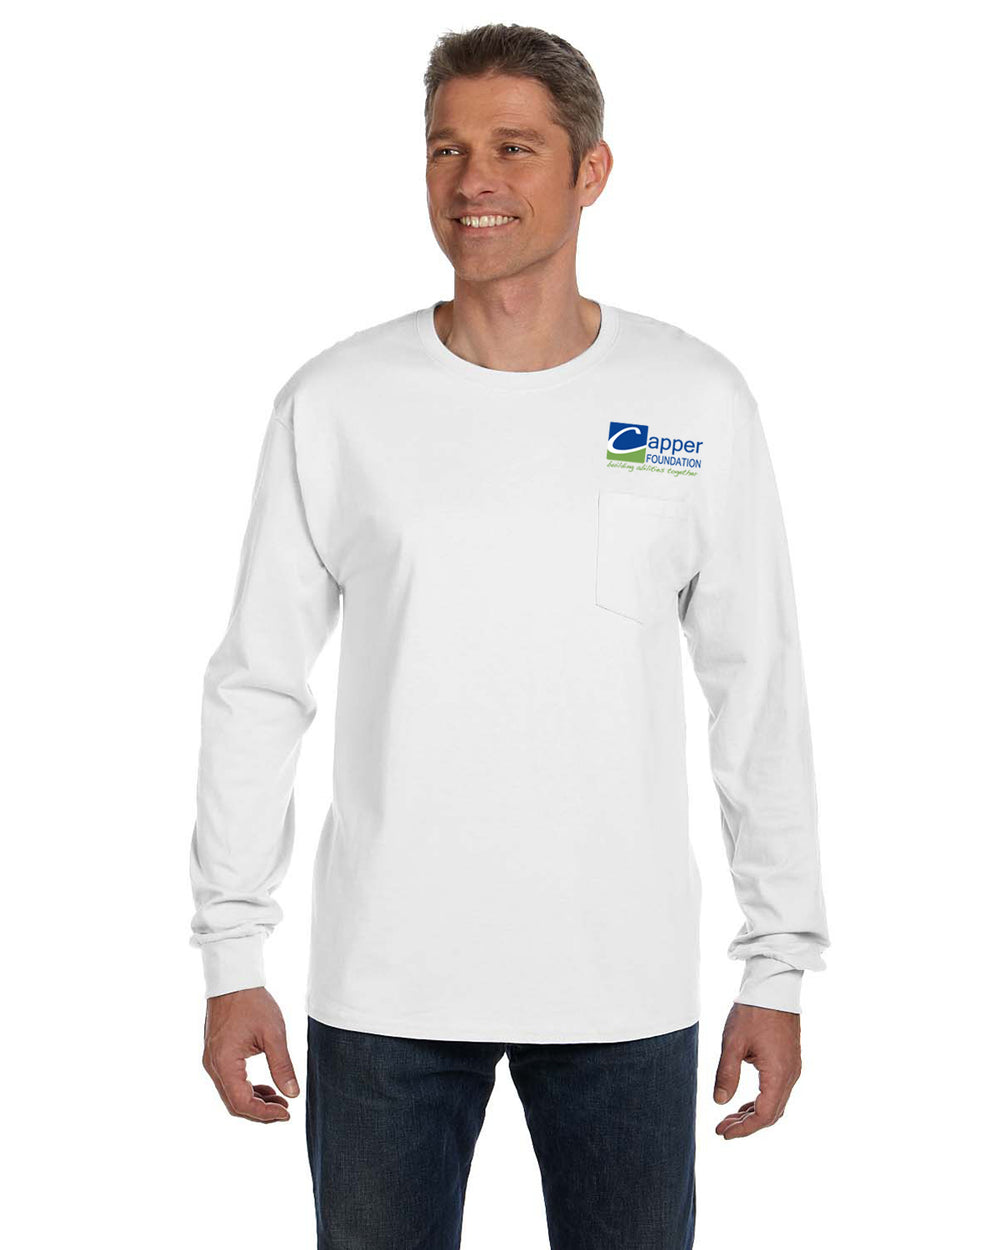 Capper Foundation - Men's Authentic-T Long-Sleeve Pocket T-Shirt - 5596